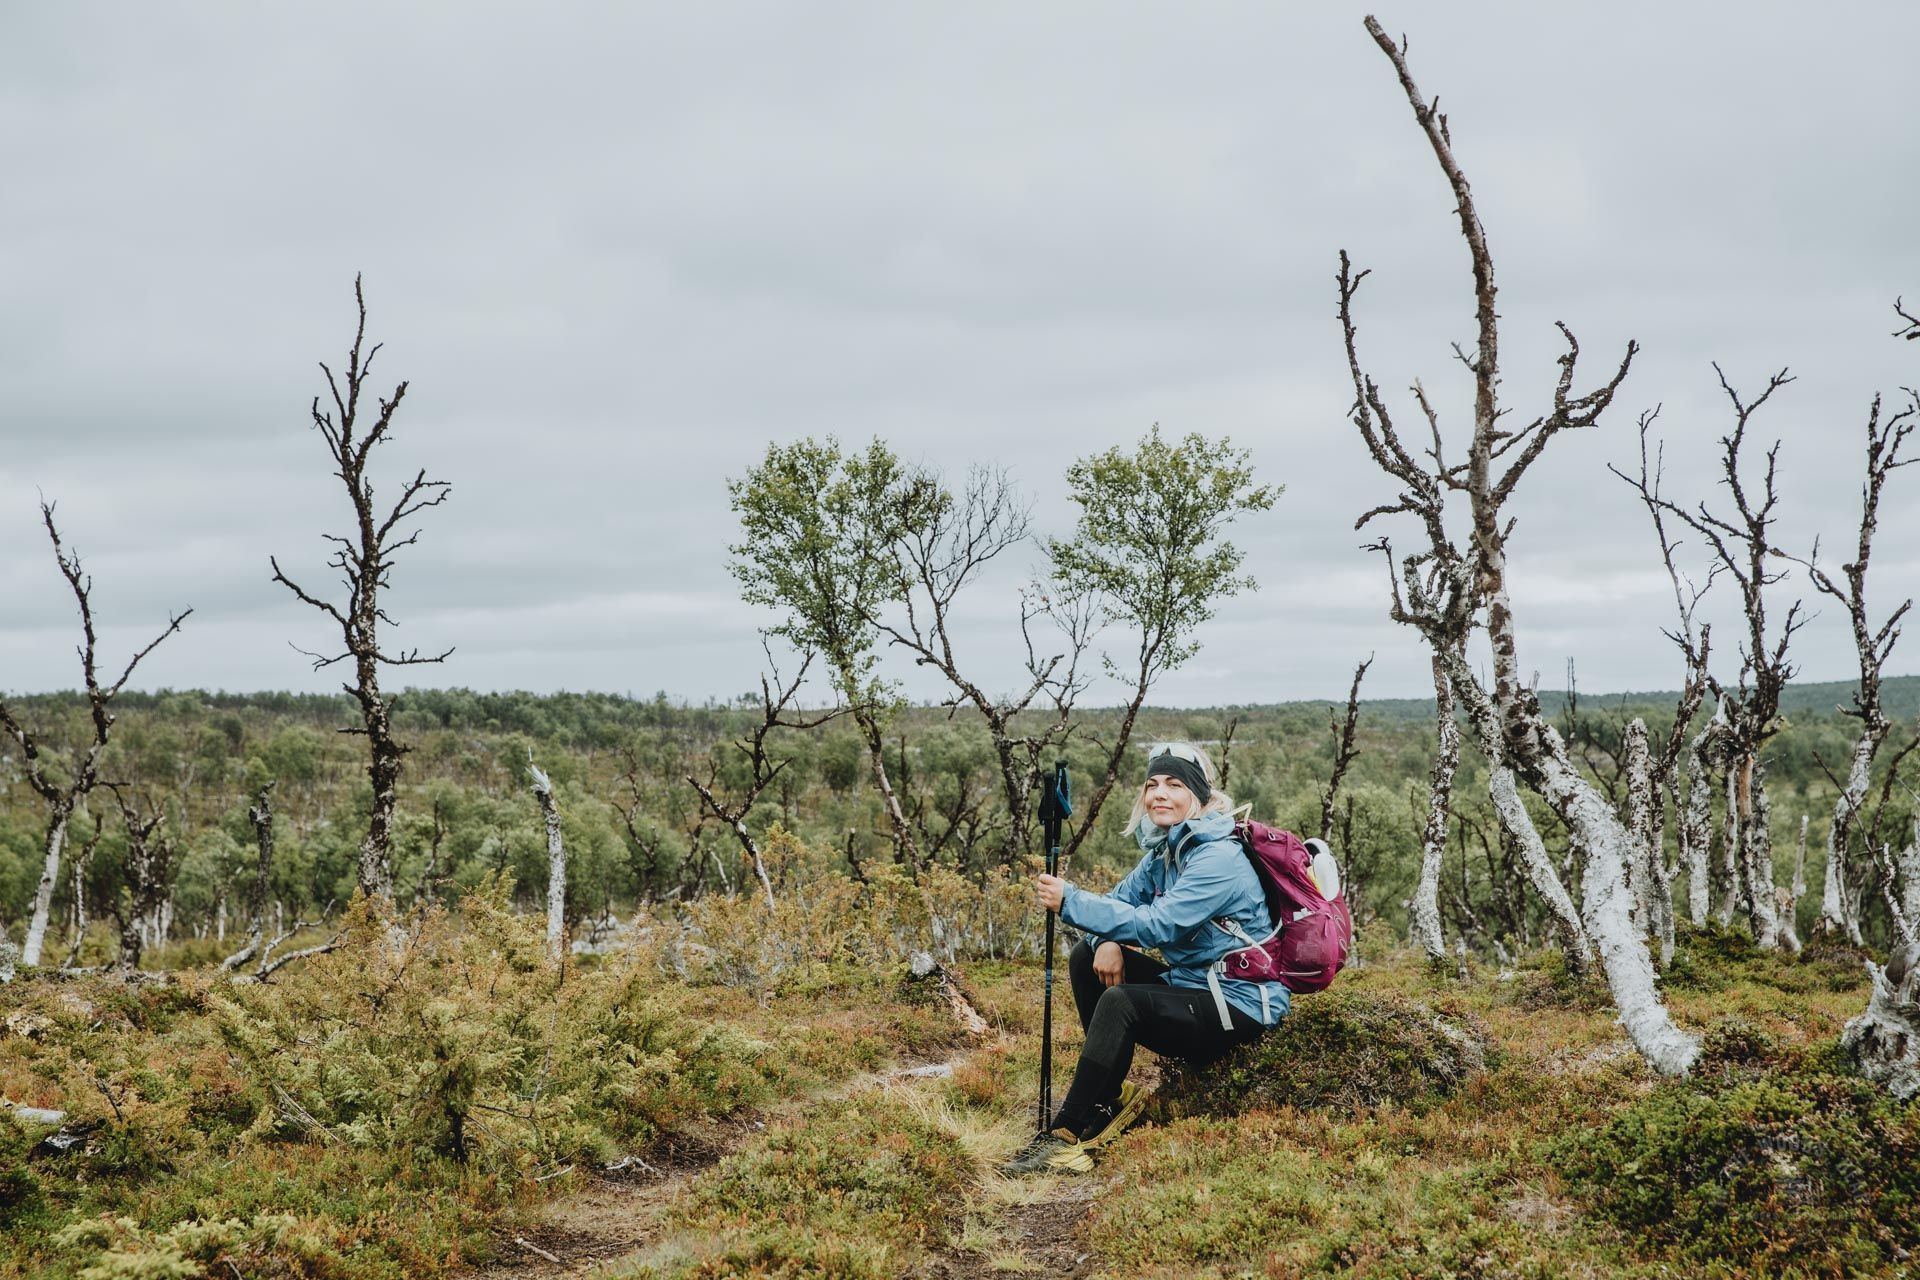 Sevettijärvi-Pulmanki Trail ultrarunning adventure in Kaldoaivi